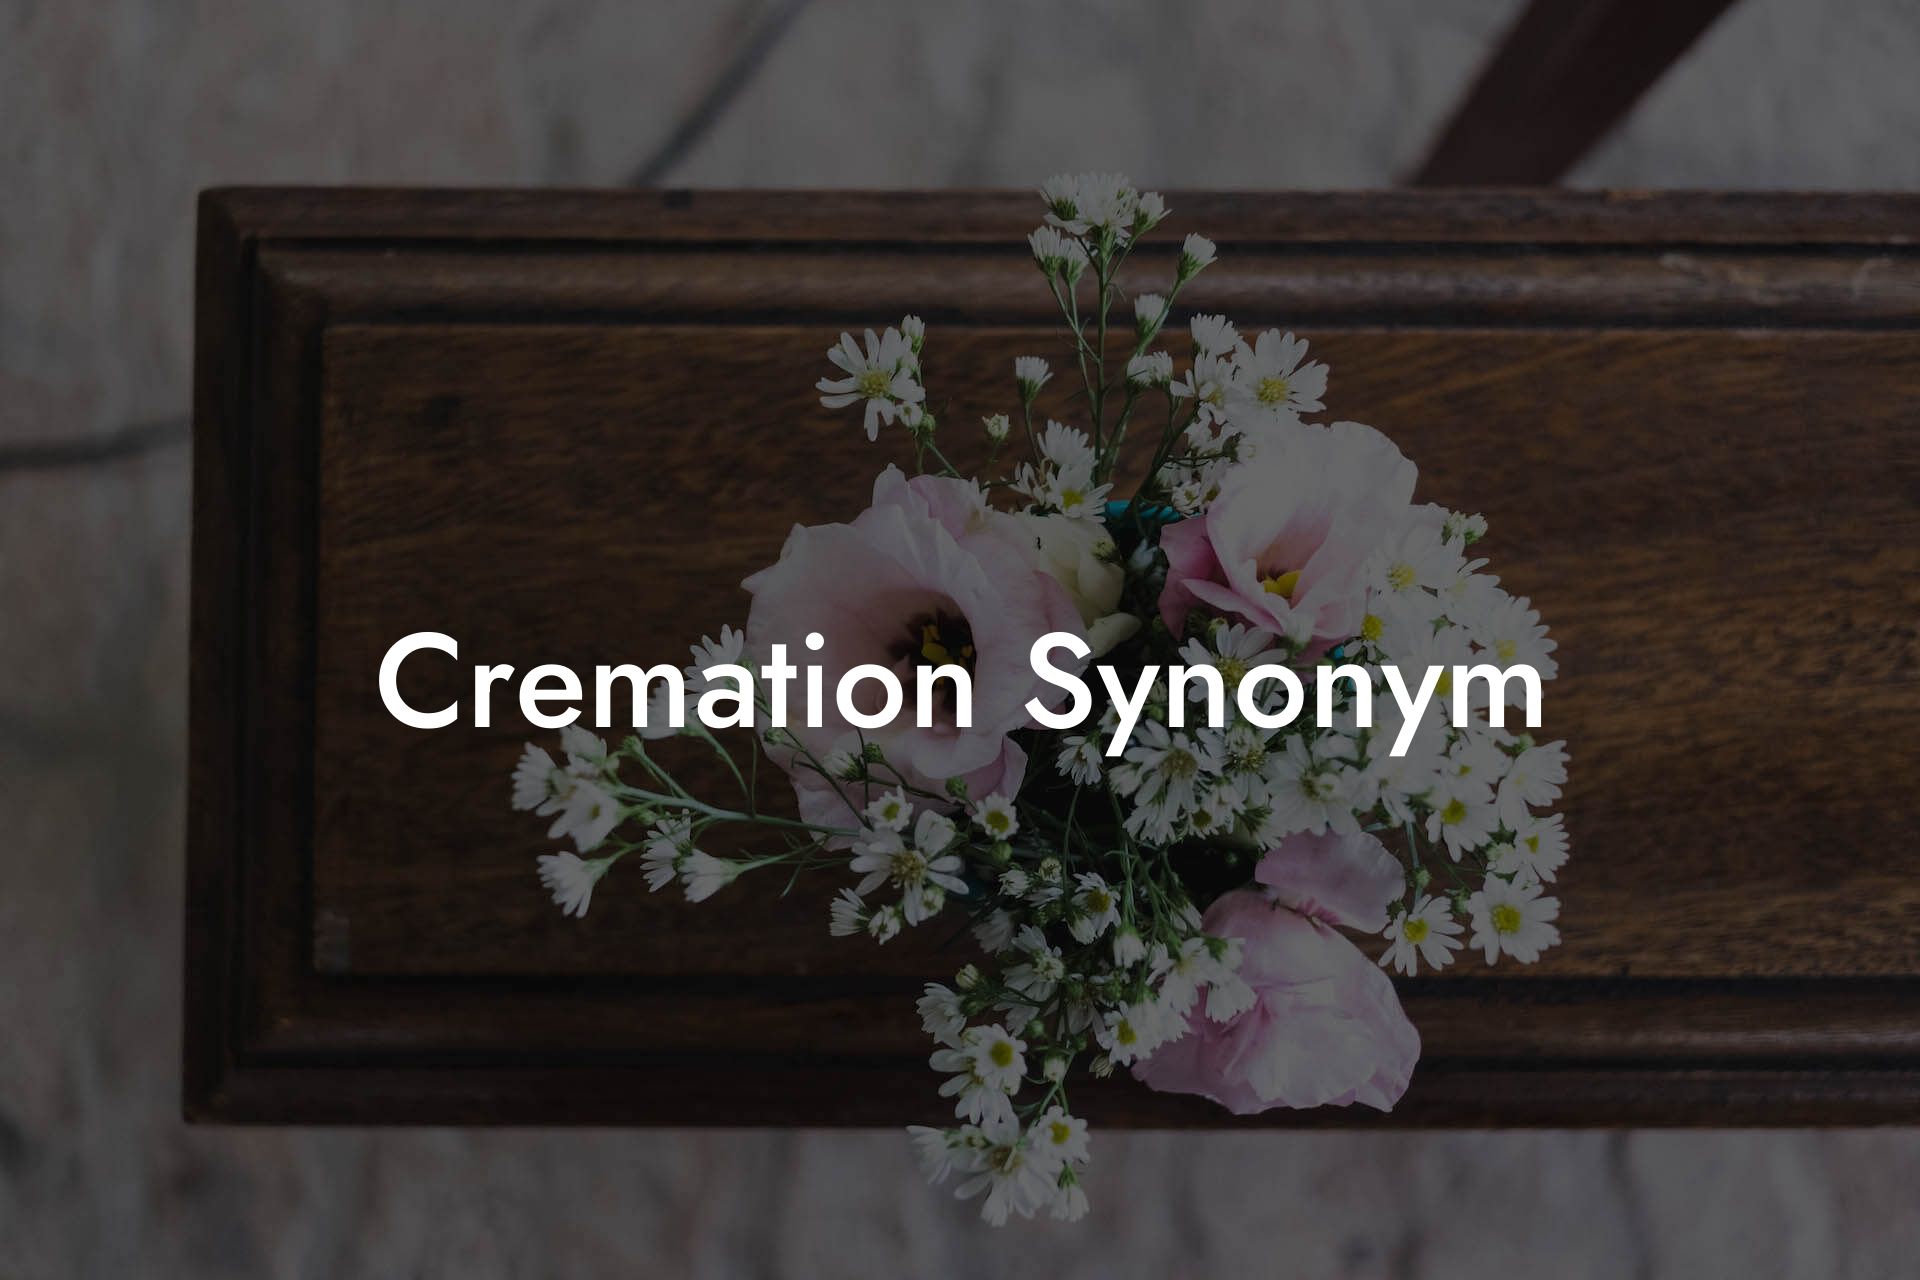 Cremation Synonym